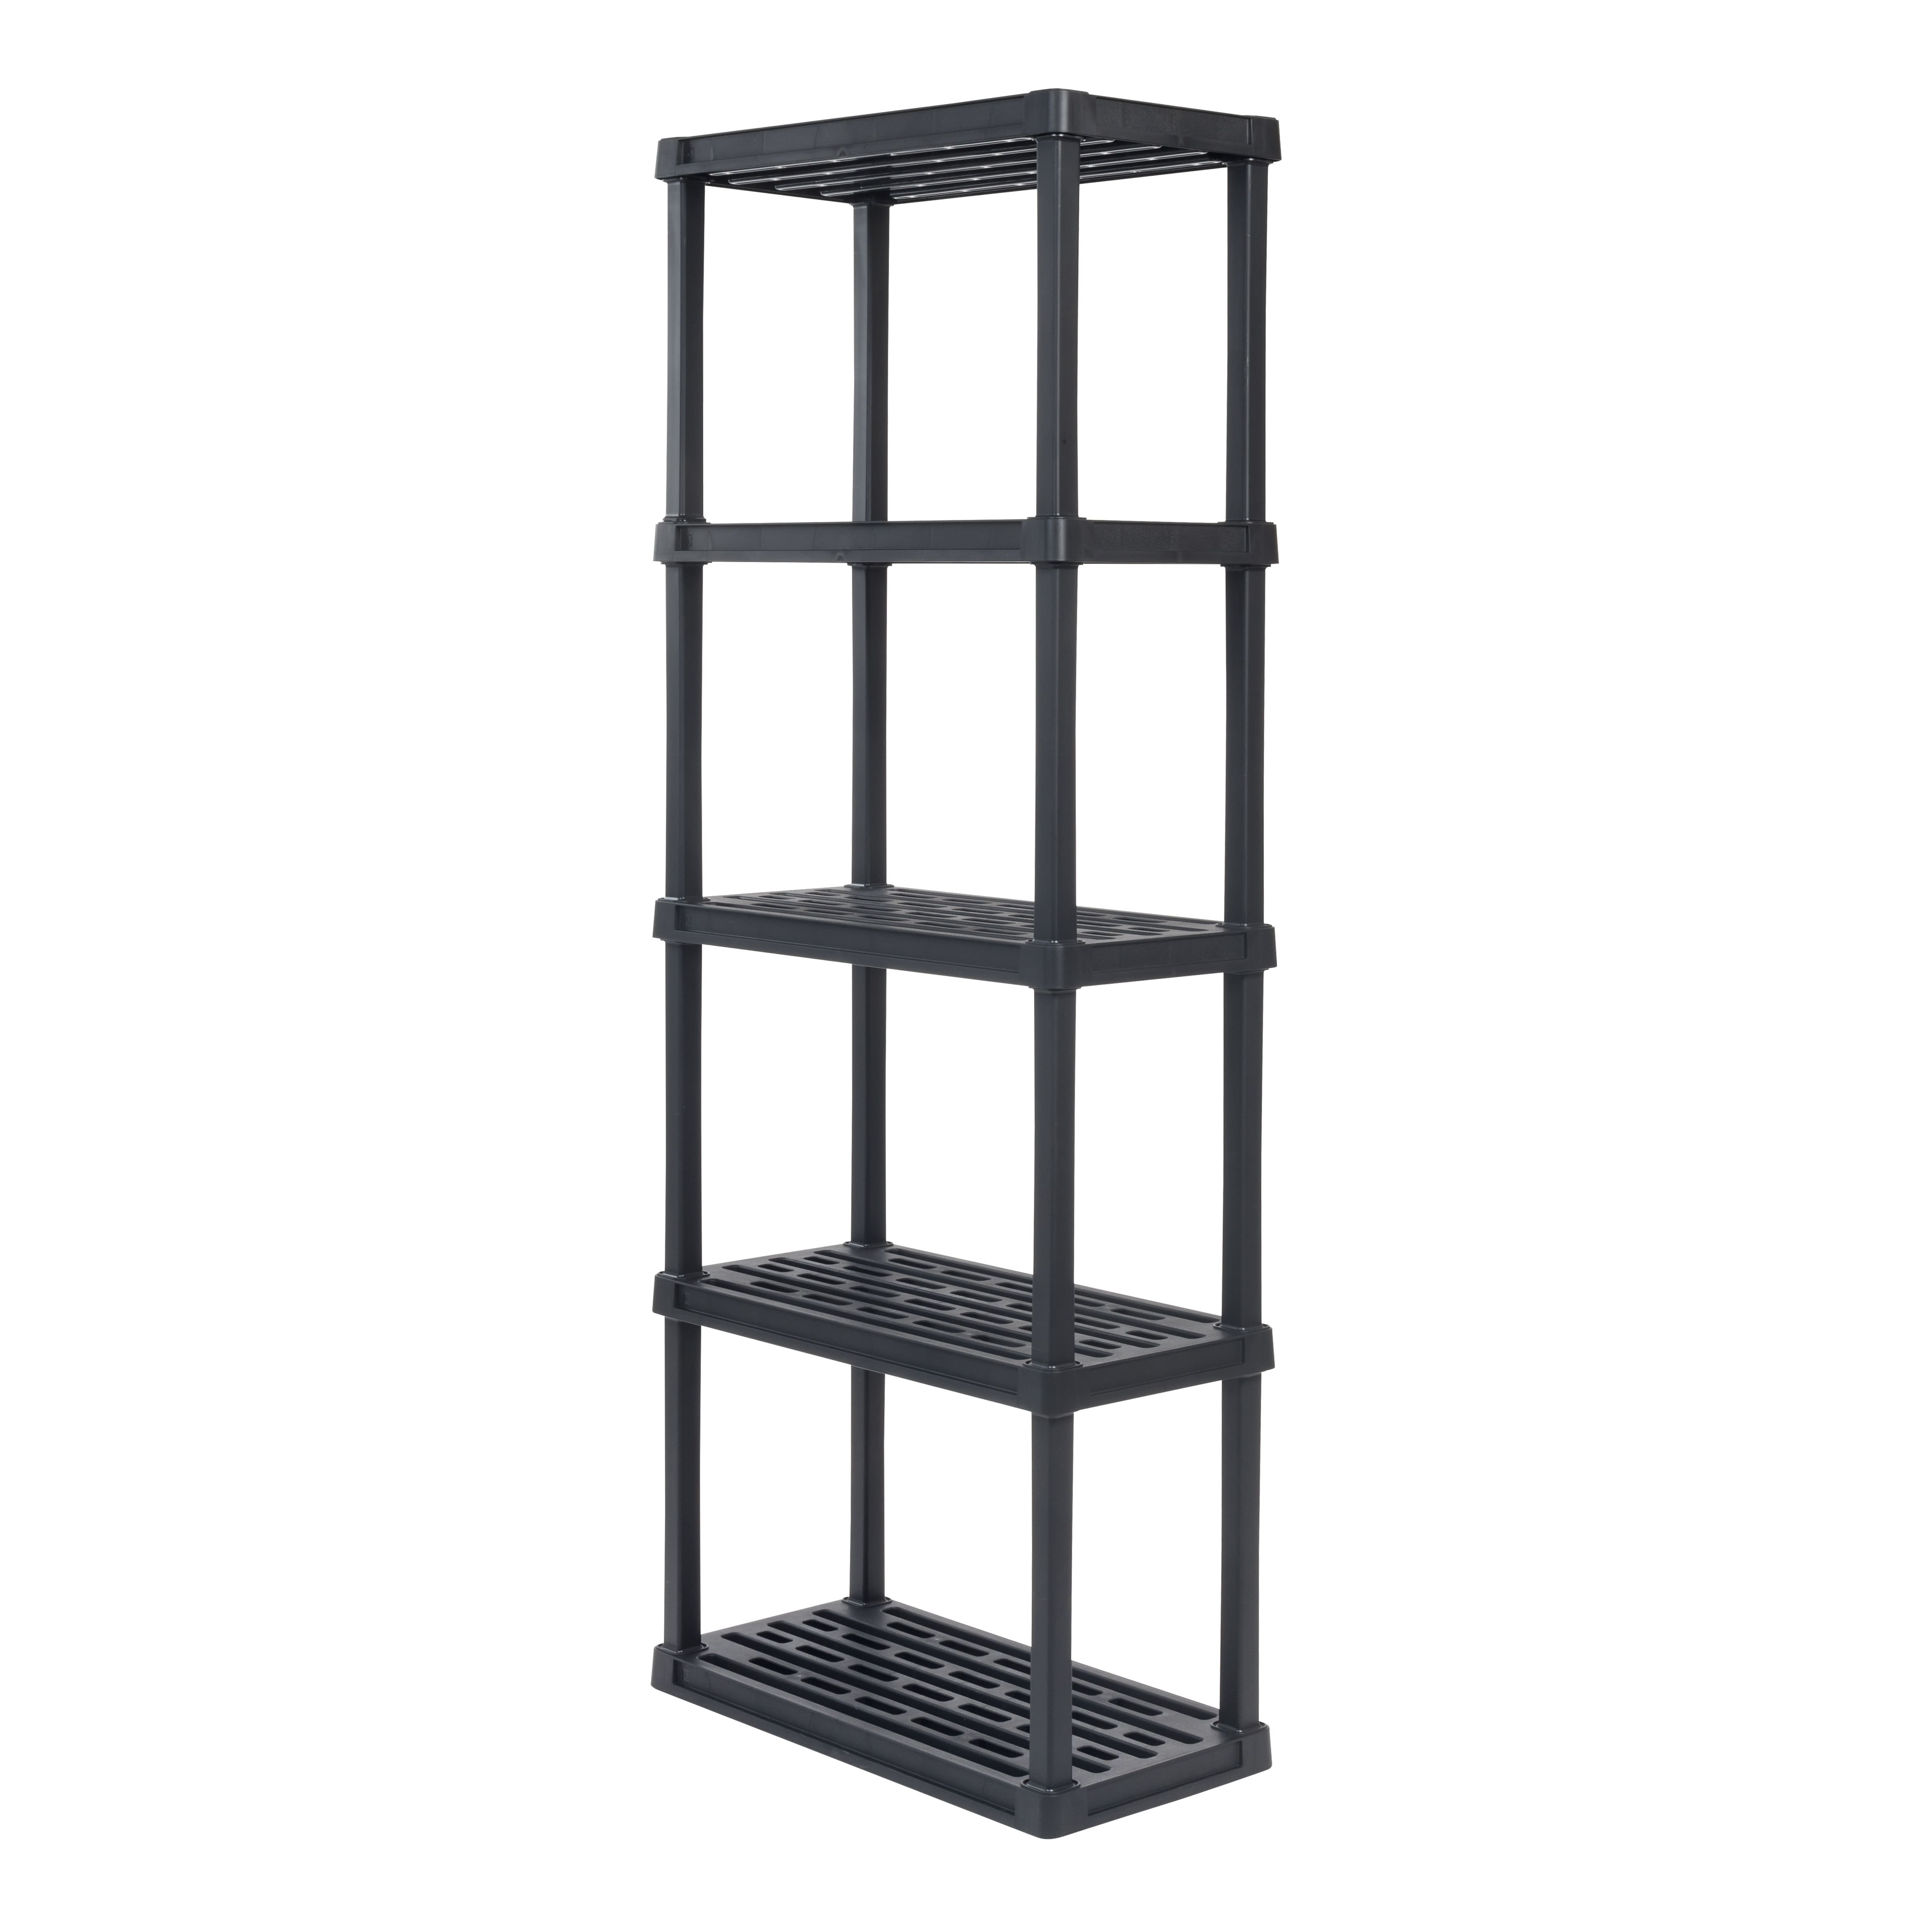 IRIS 5.3ft. Black Plastic Rack Shelf with 5 Medium Shelves